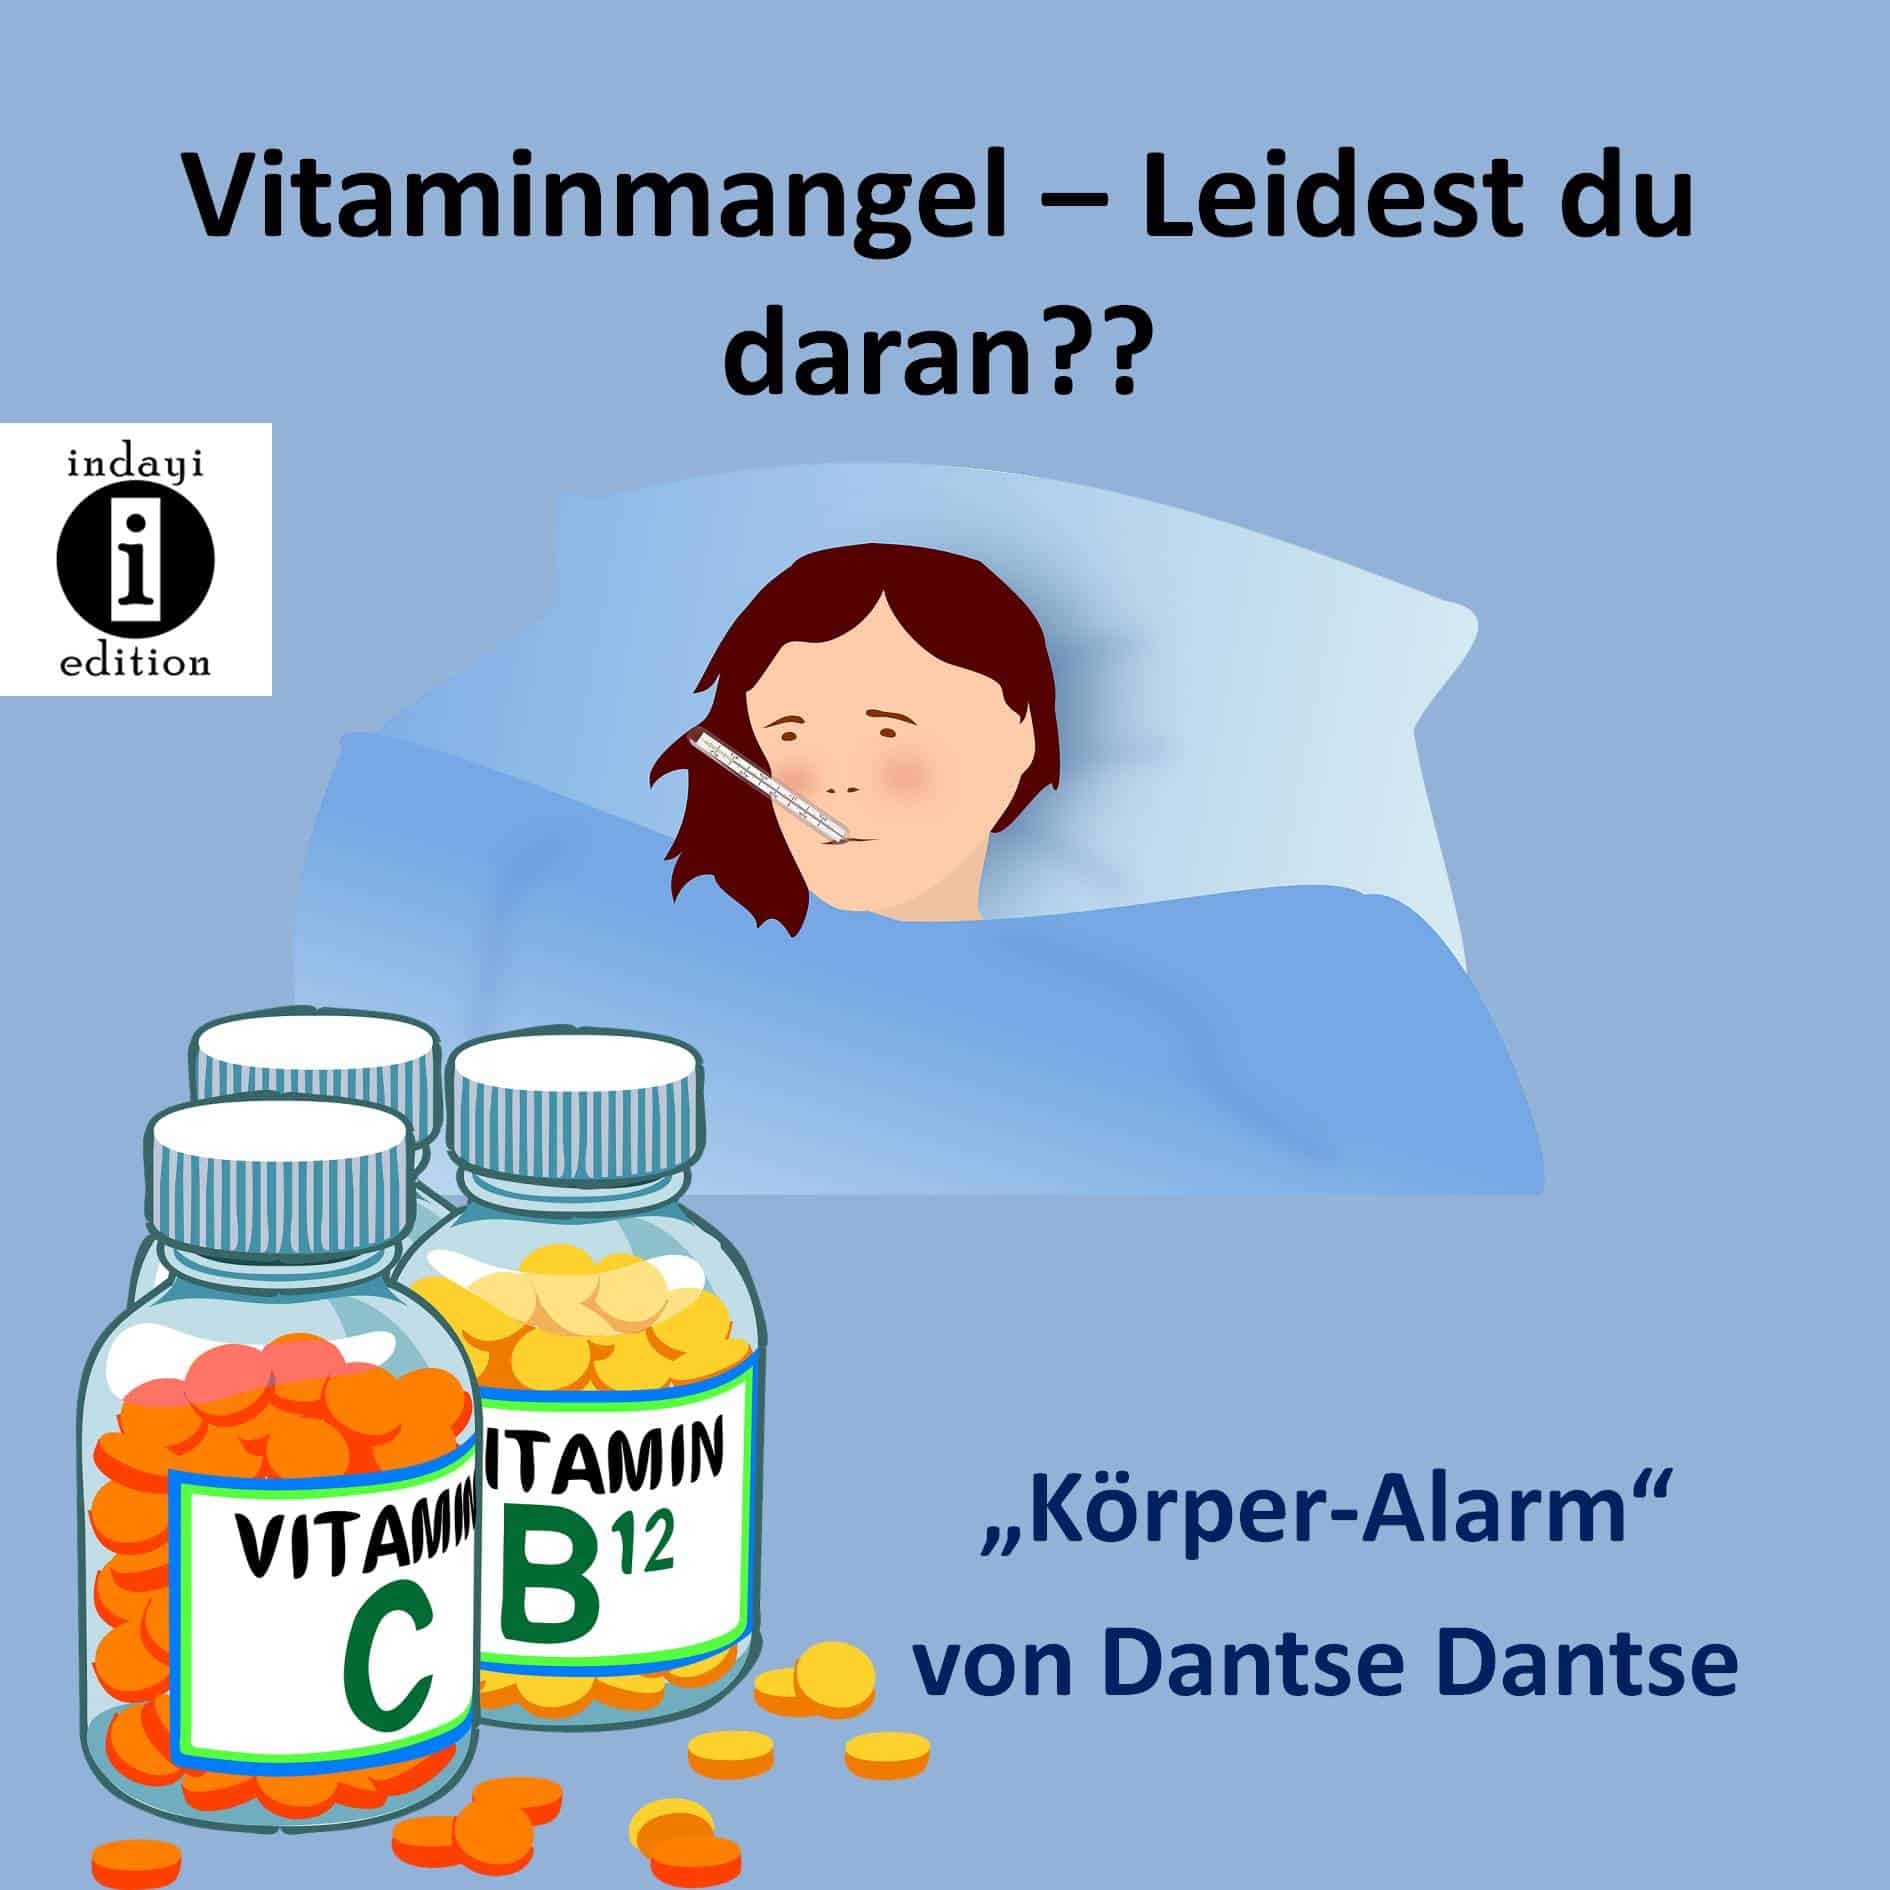 You are currently viewing Vitaminmangel – Leidest du daran?? Buchvorstellung Körper-Alarm